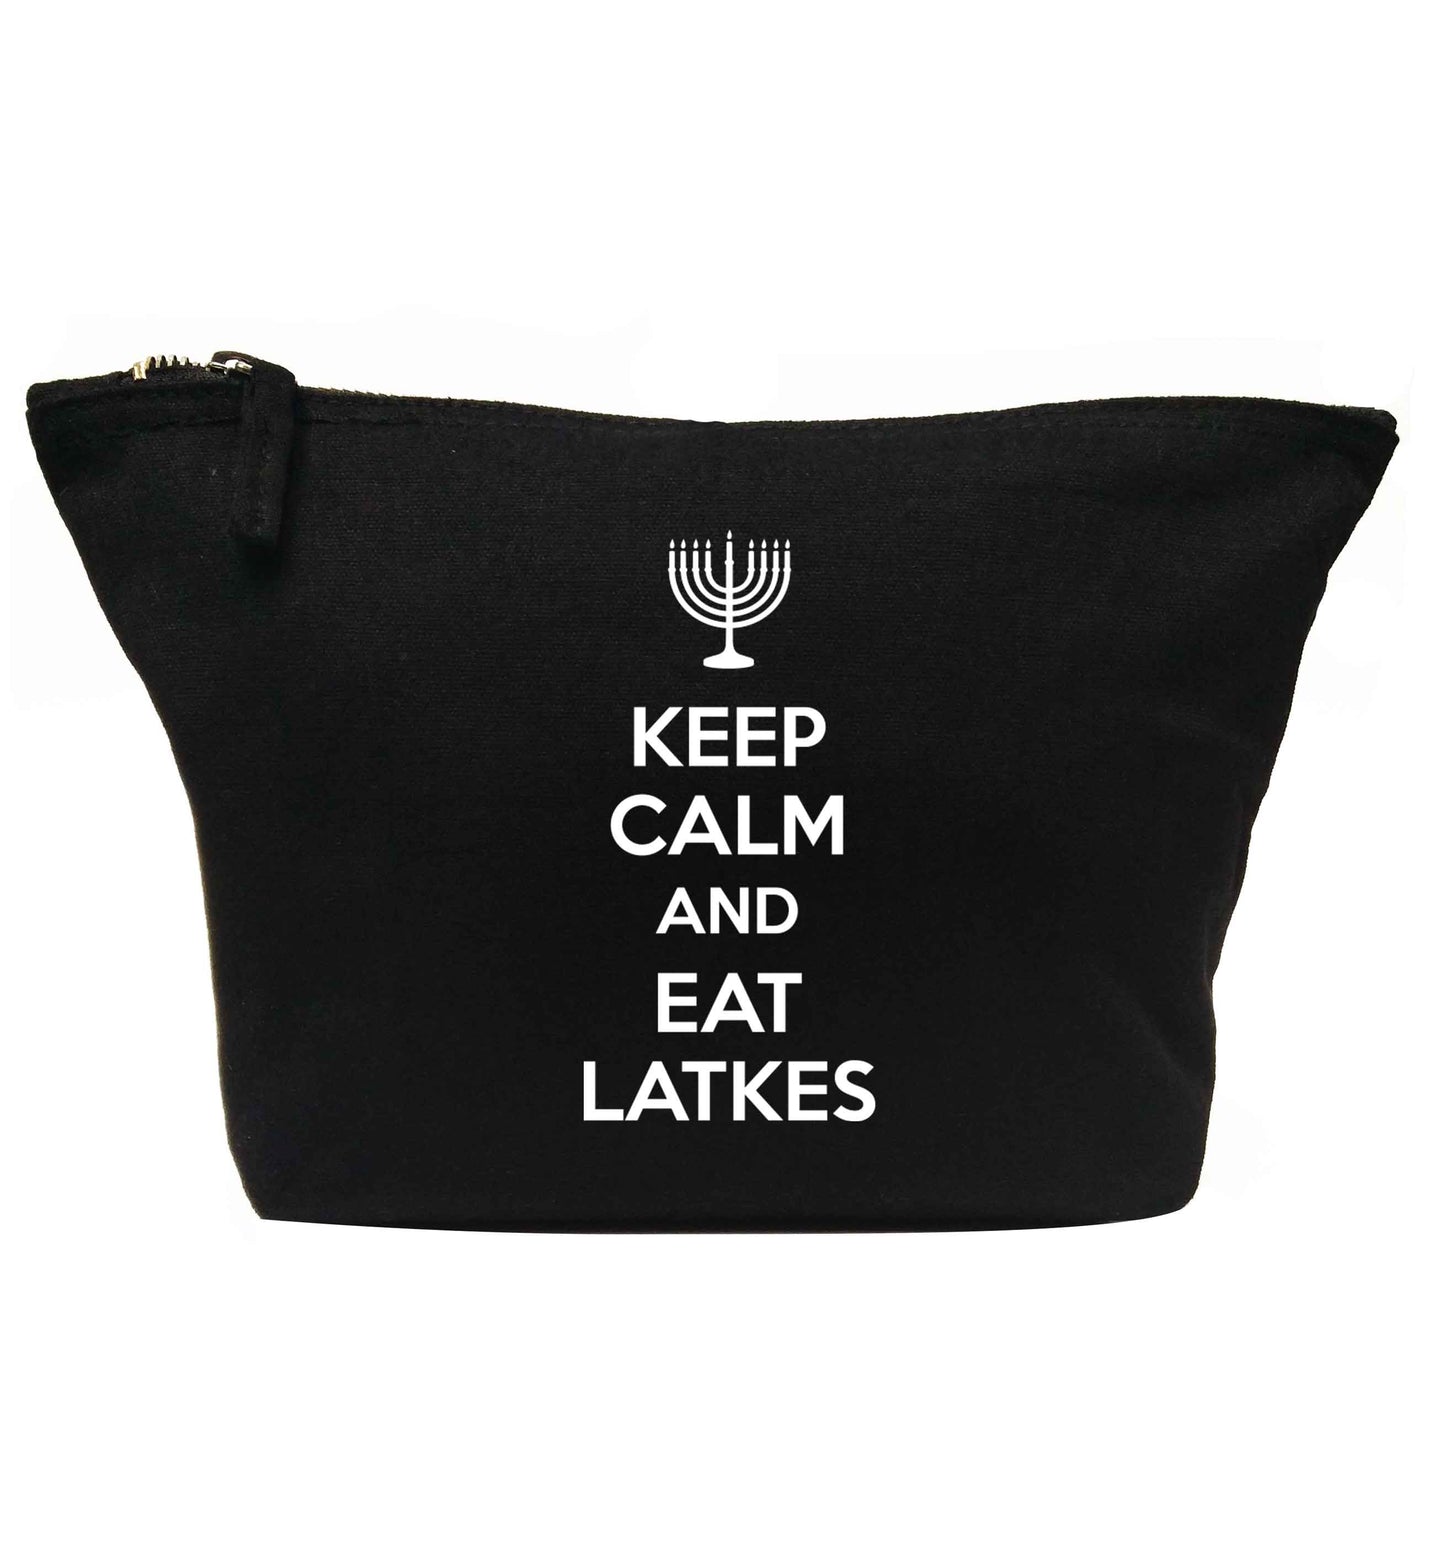 Keep calm and eat latkes | Makeup / wash bag